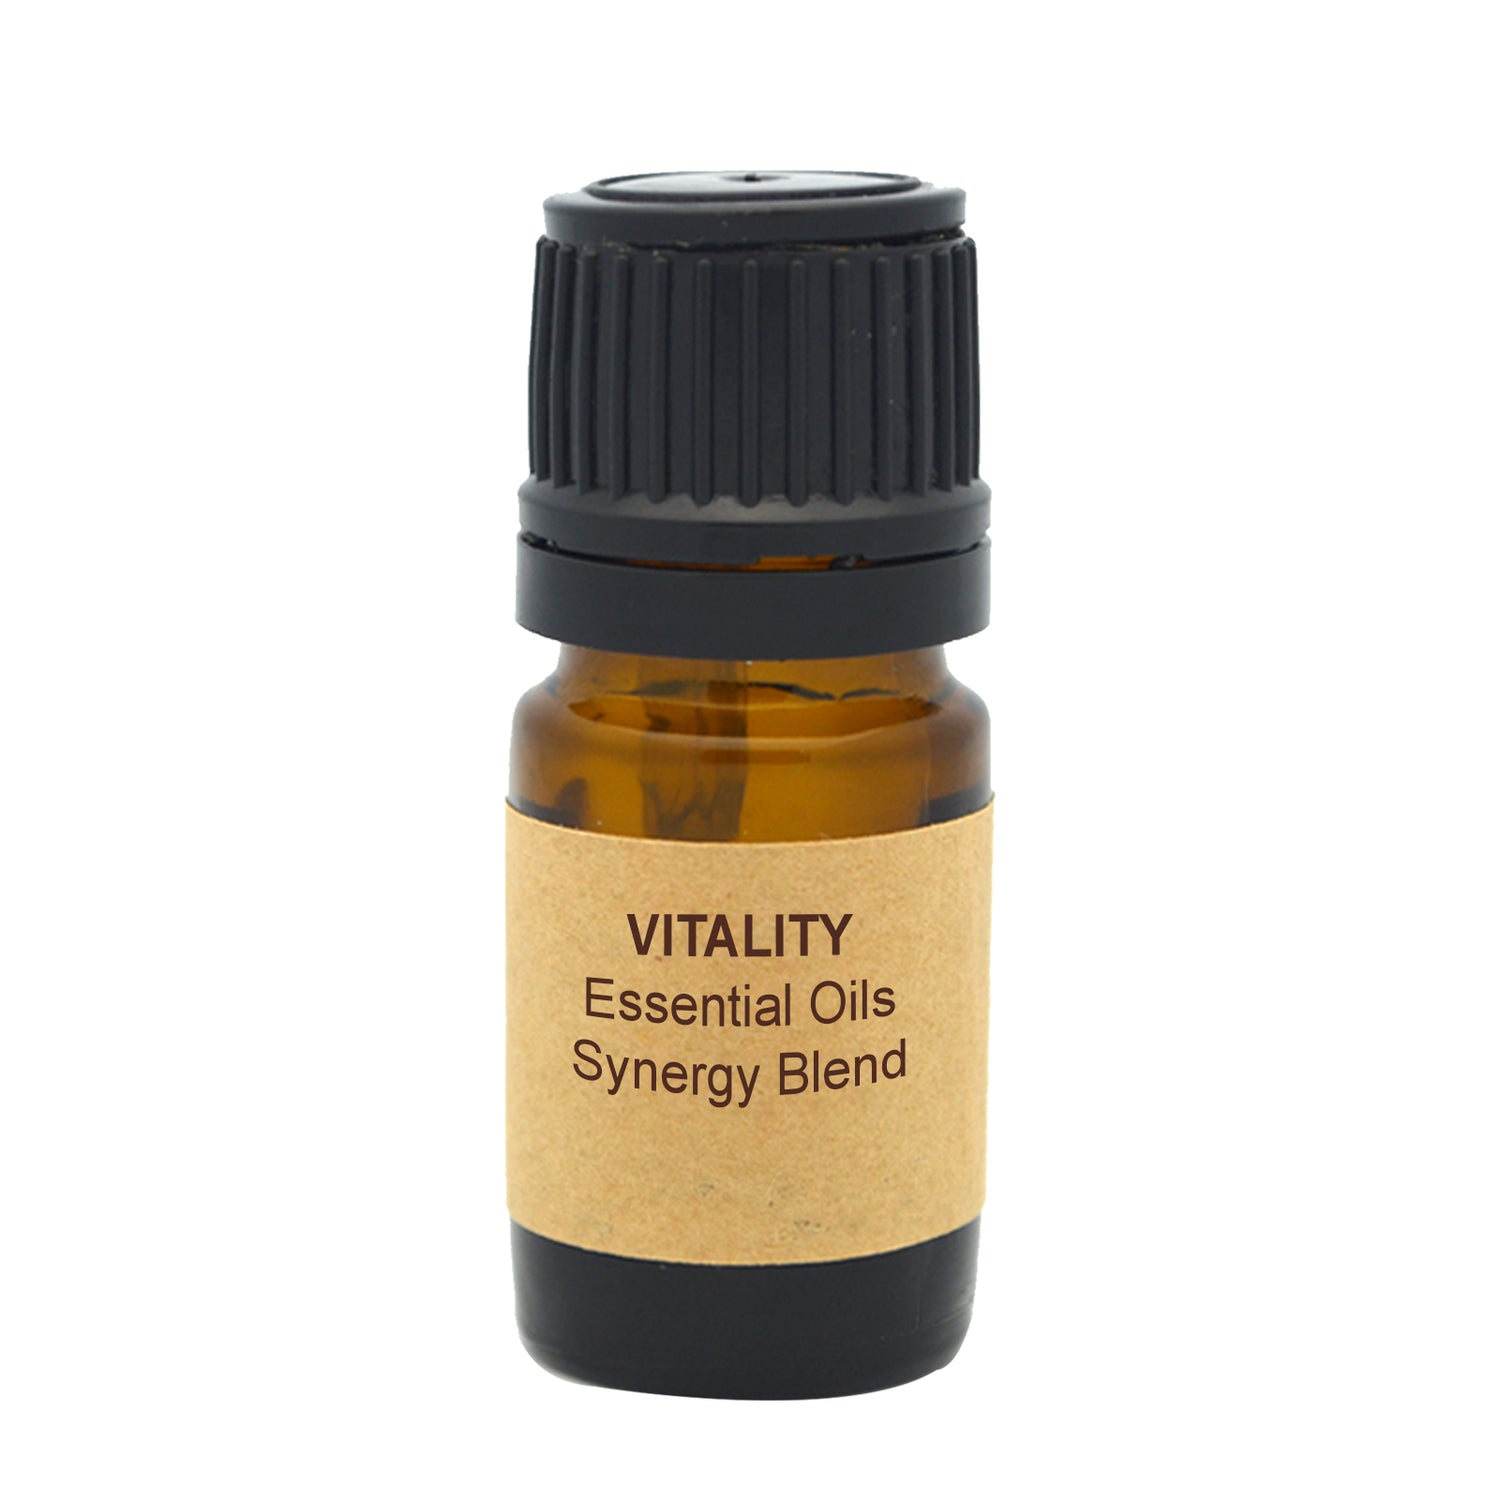 Vitality Essential Oils Synergy Blend.